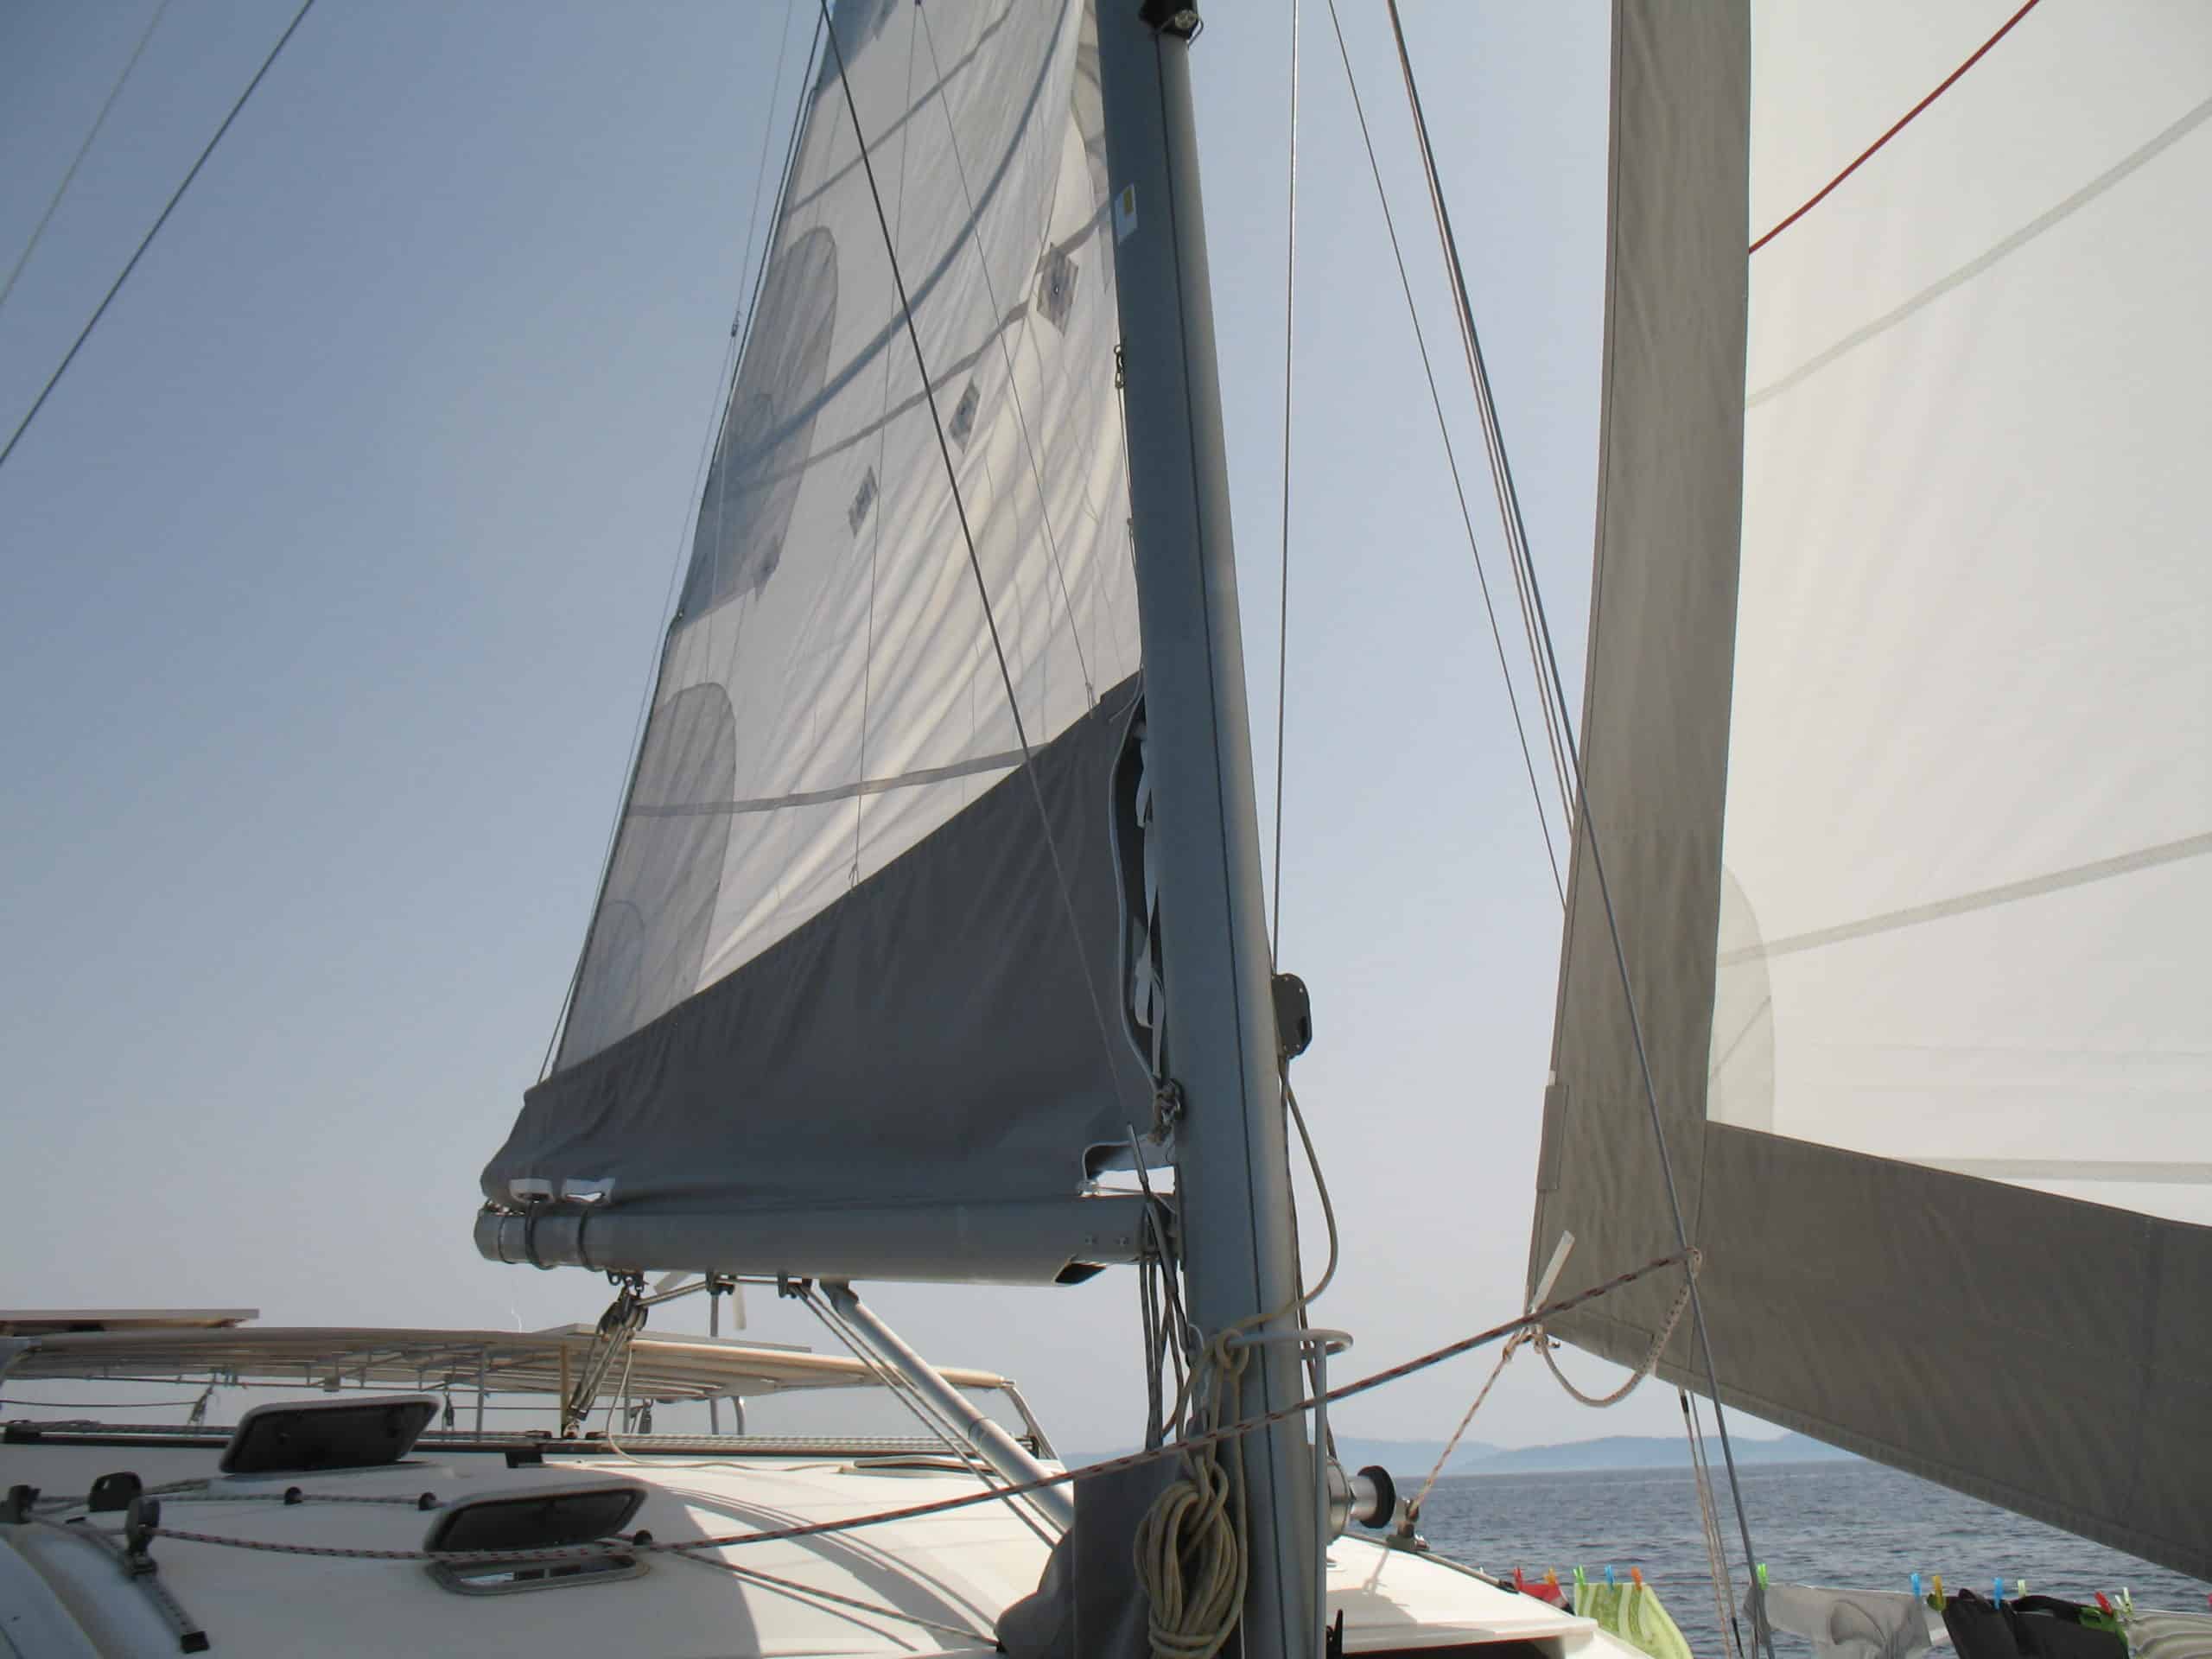 Island Spirit 40 sails